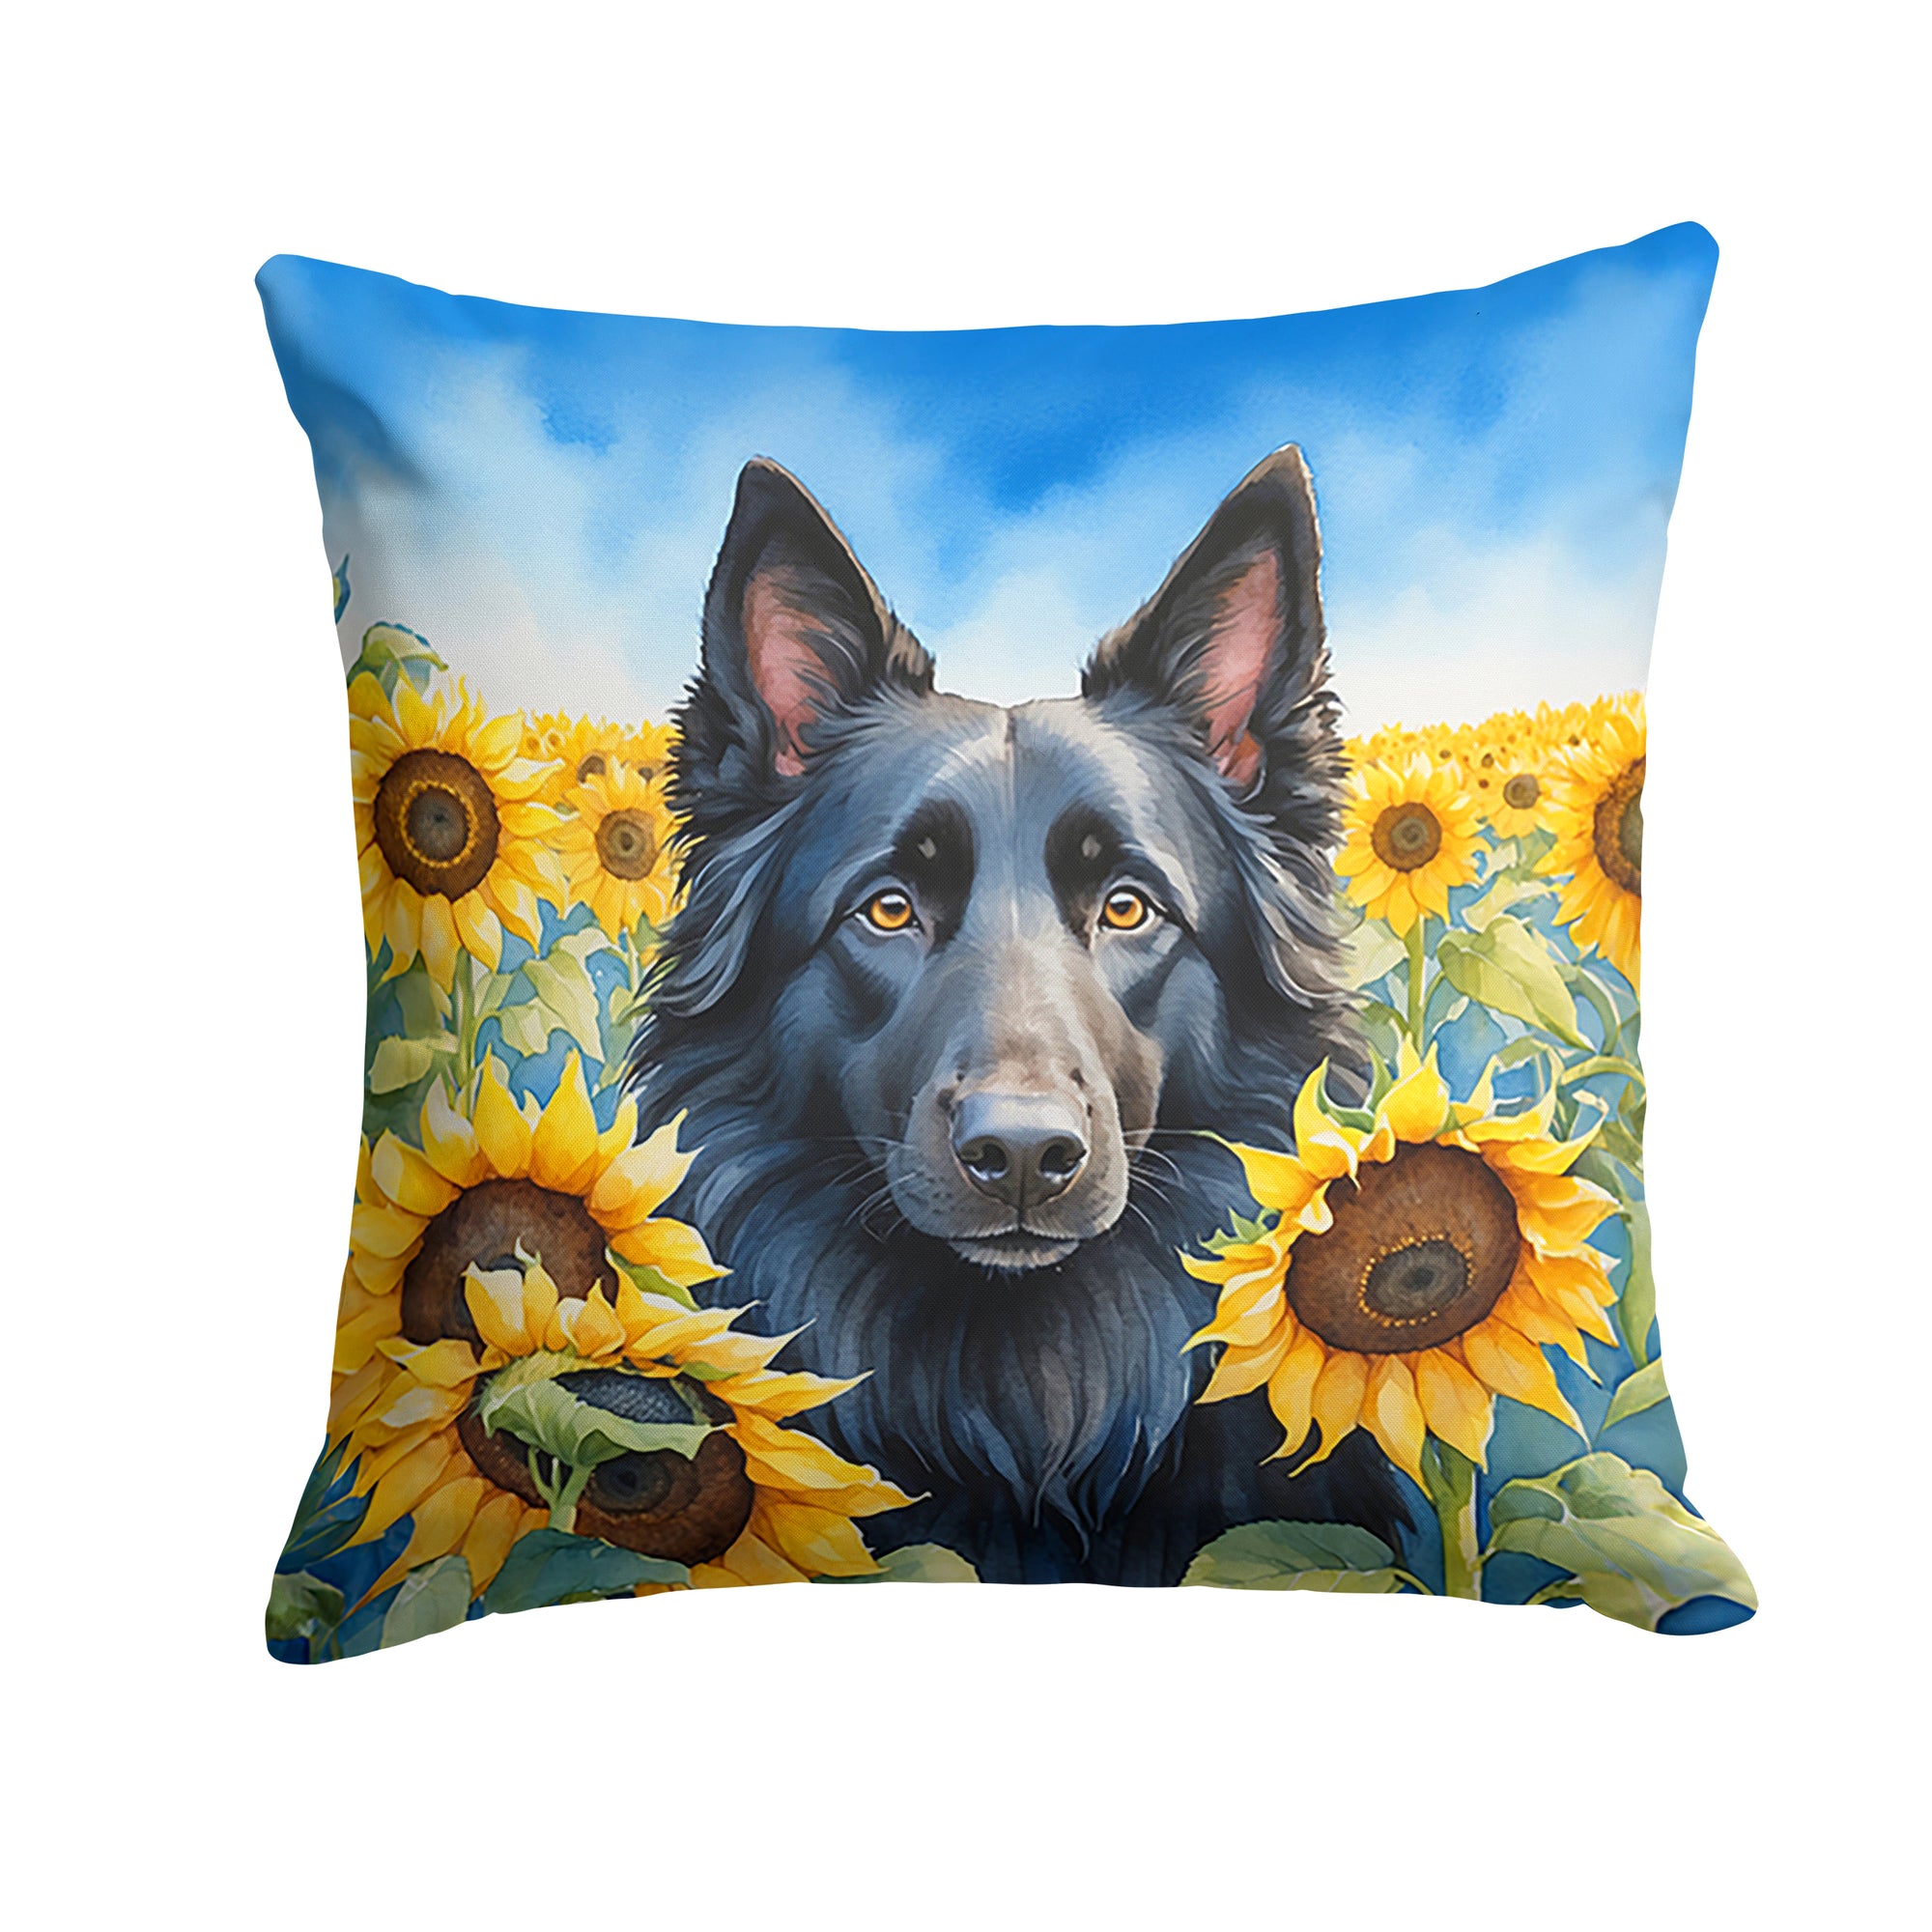 Buy this Belgian Sheepdog in Sunflowers Throw Pillow